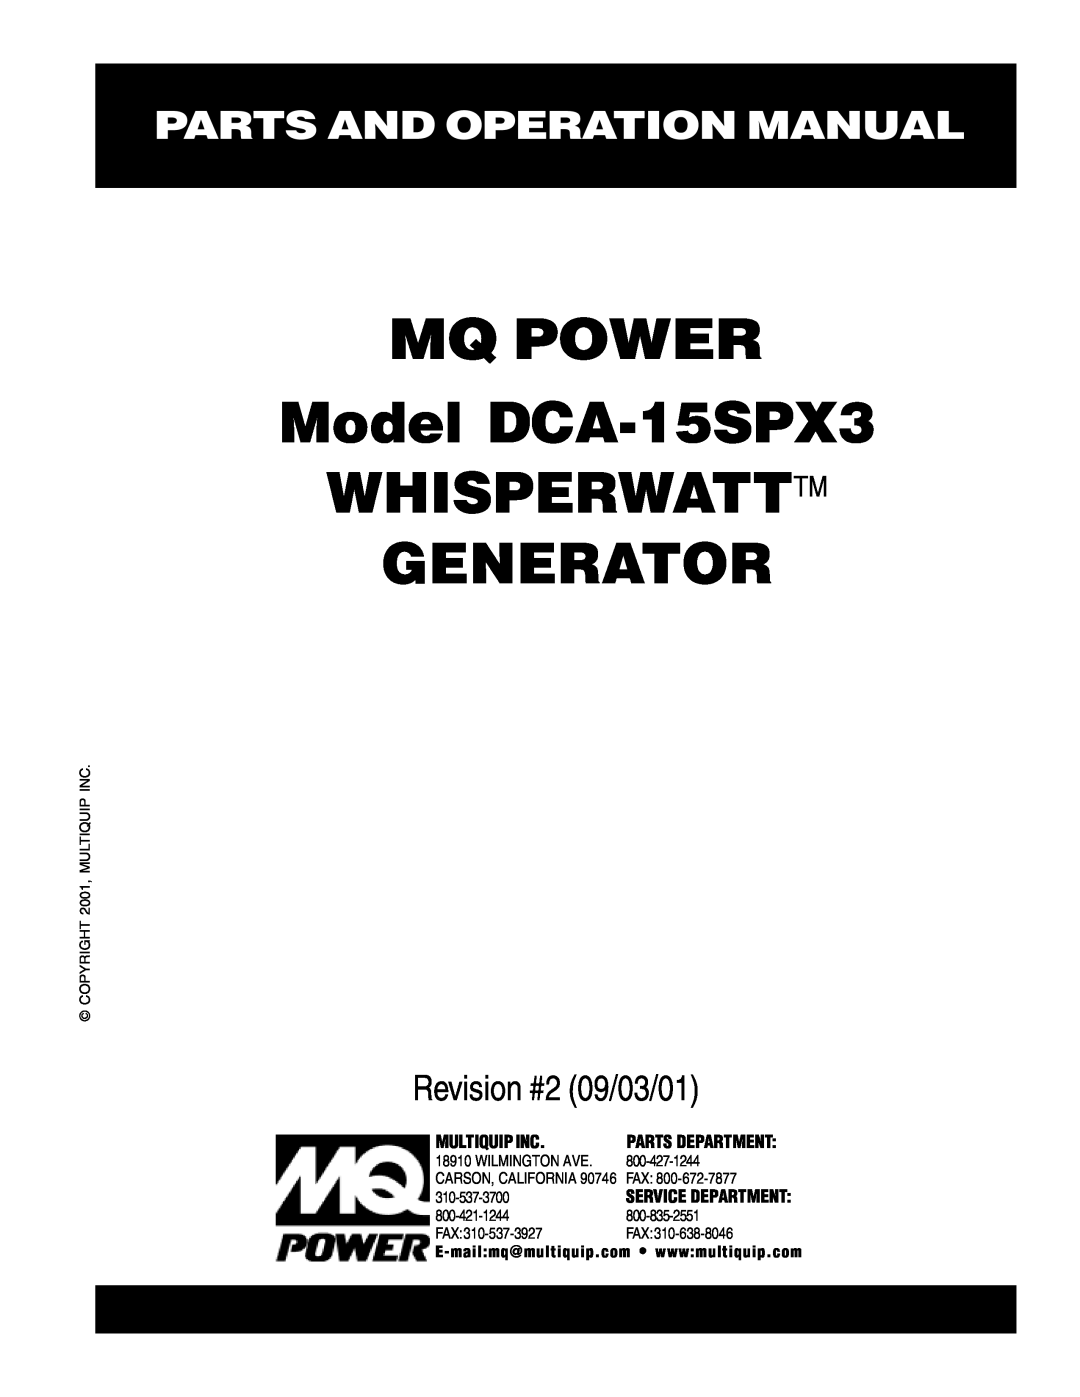 Multiquip operation manual MQ POWER Model DCA-15SPX3 WHISPERWATTTM GENERATOR, Parts And Operation Manual 